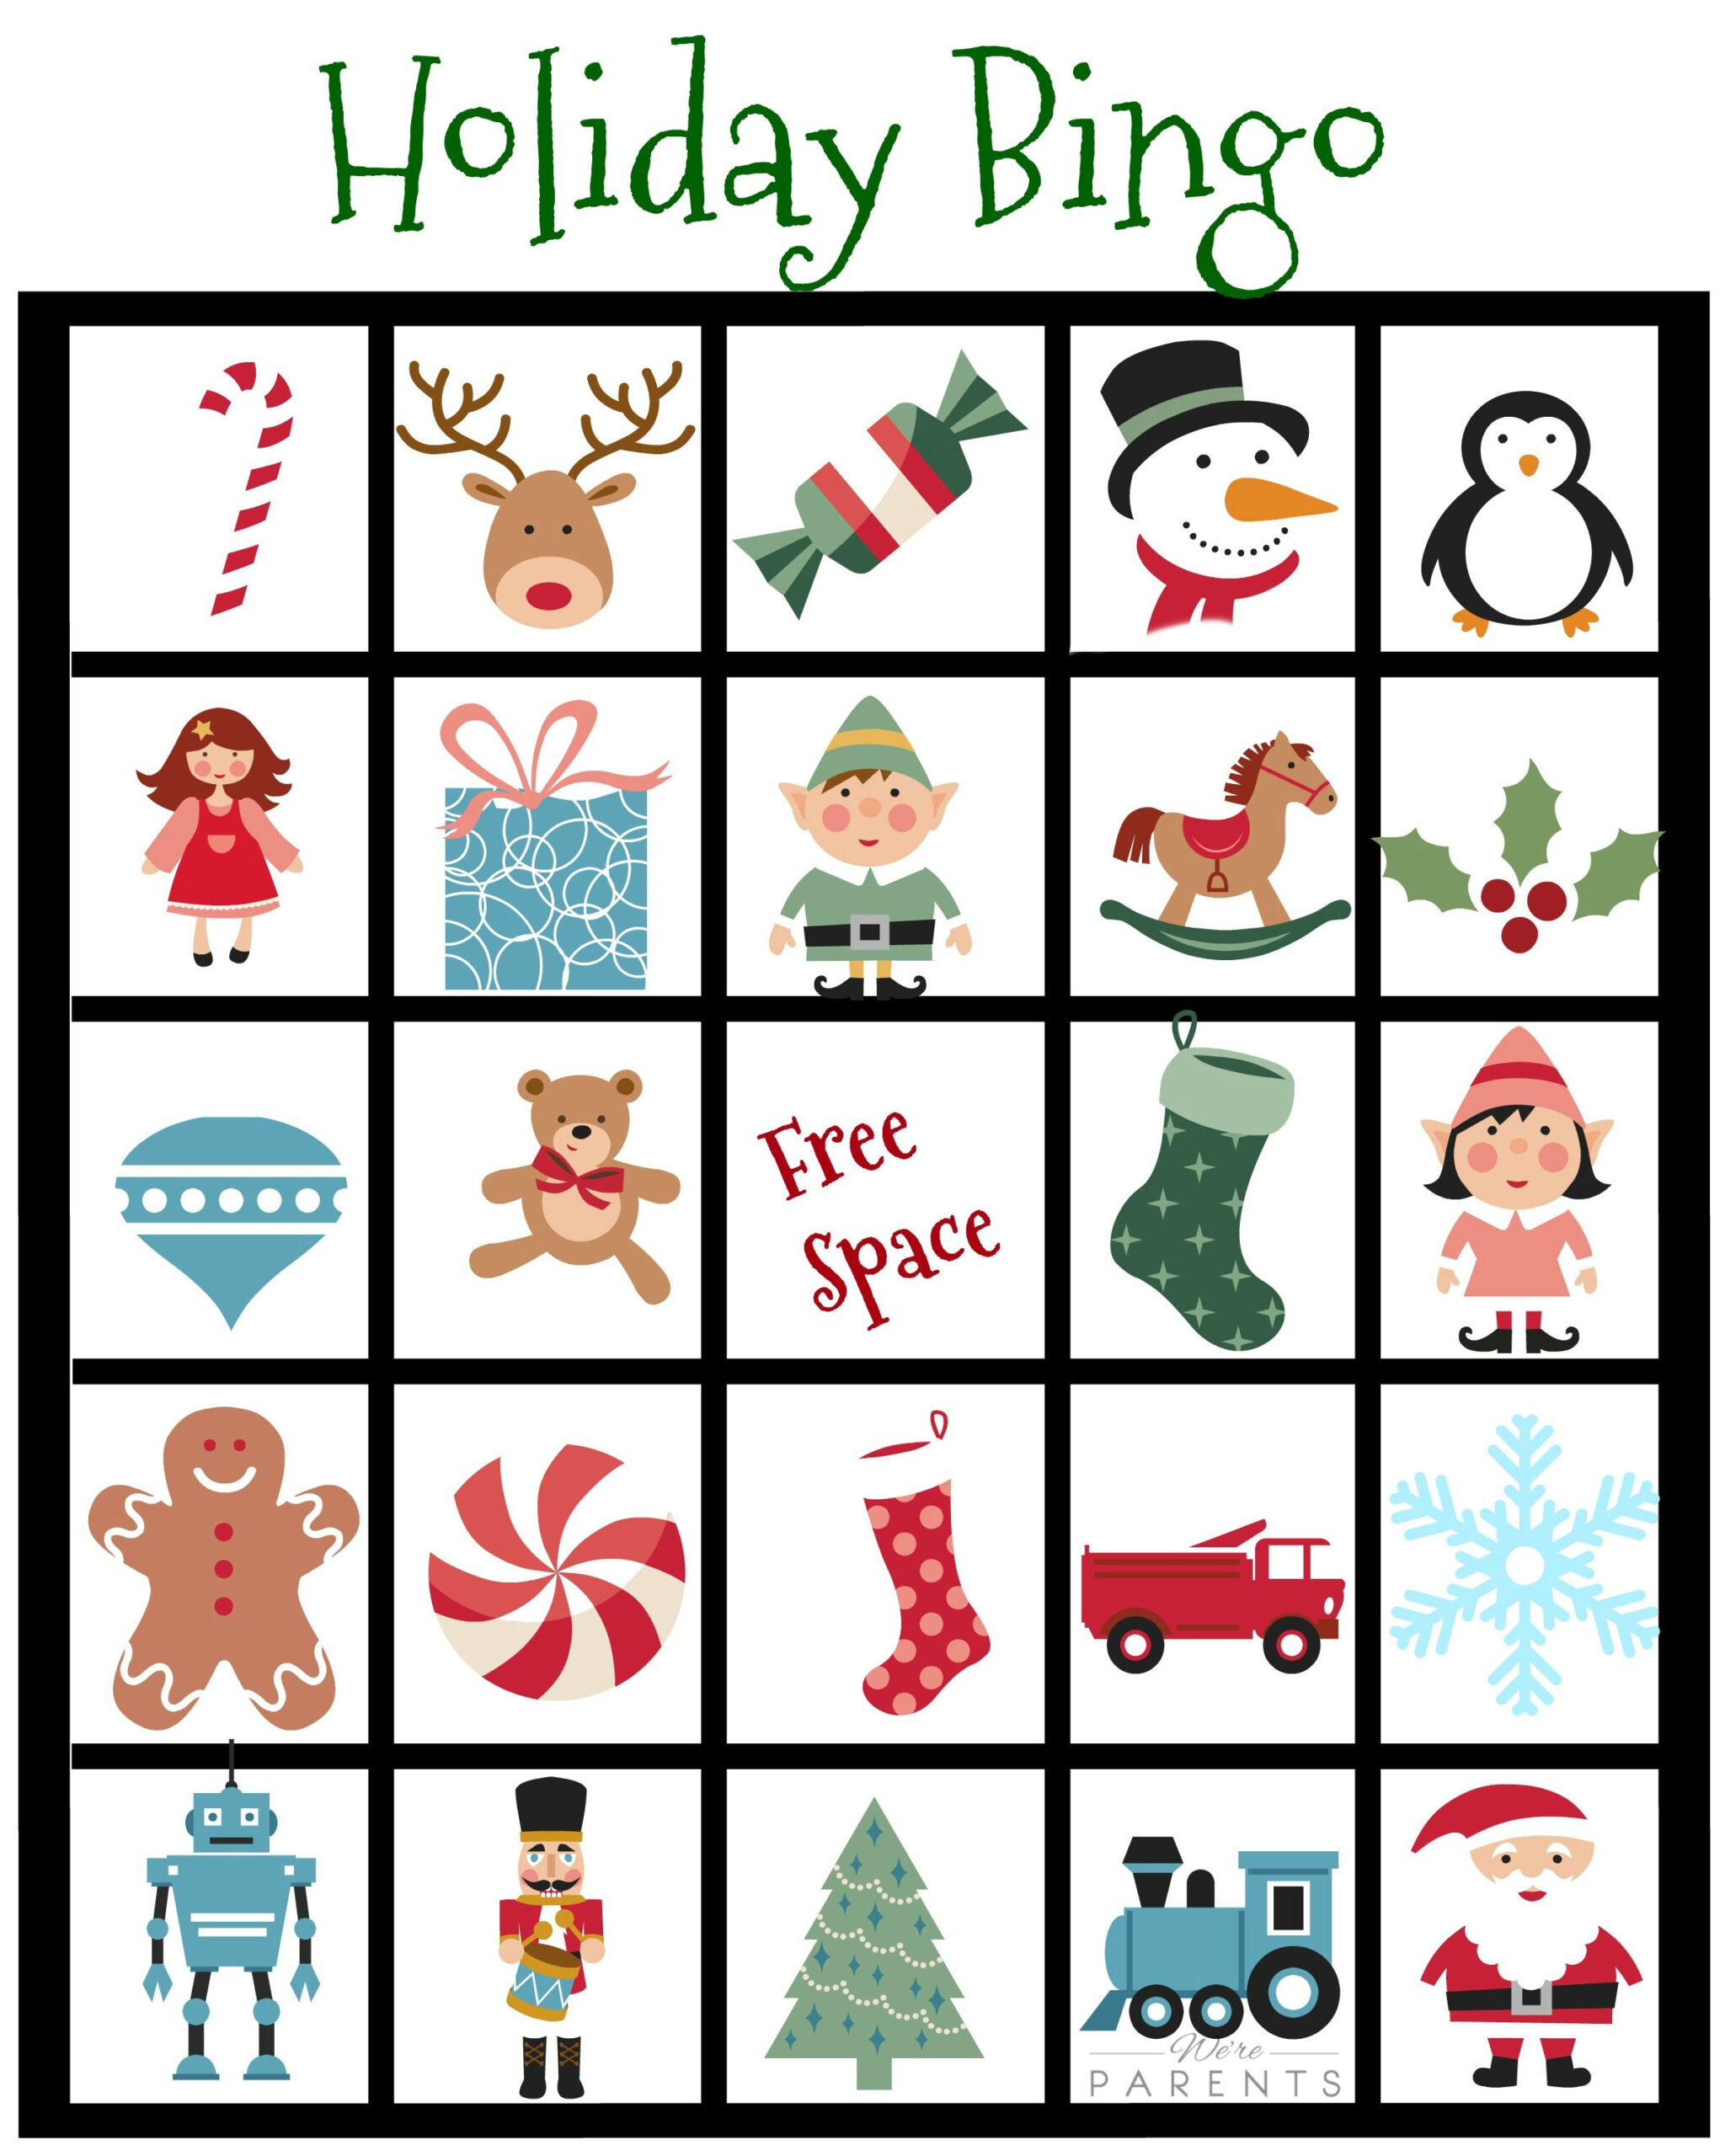 Holiday Bingo Card Printable For Kids We re Parents Holiday Bingo 